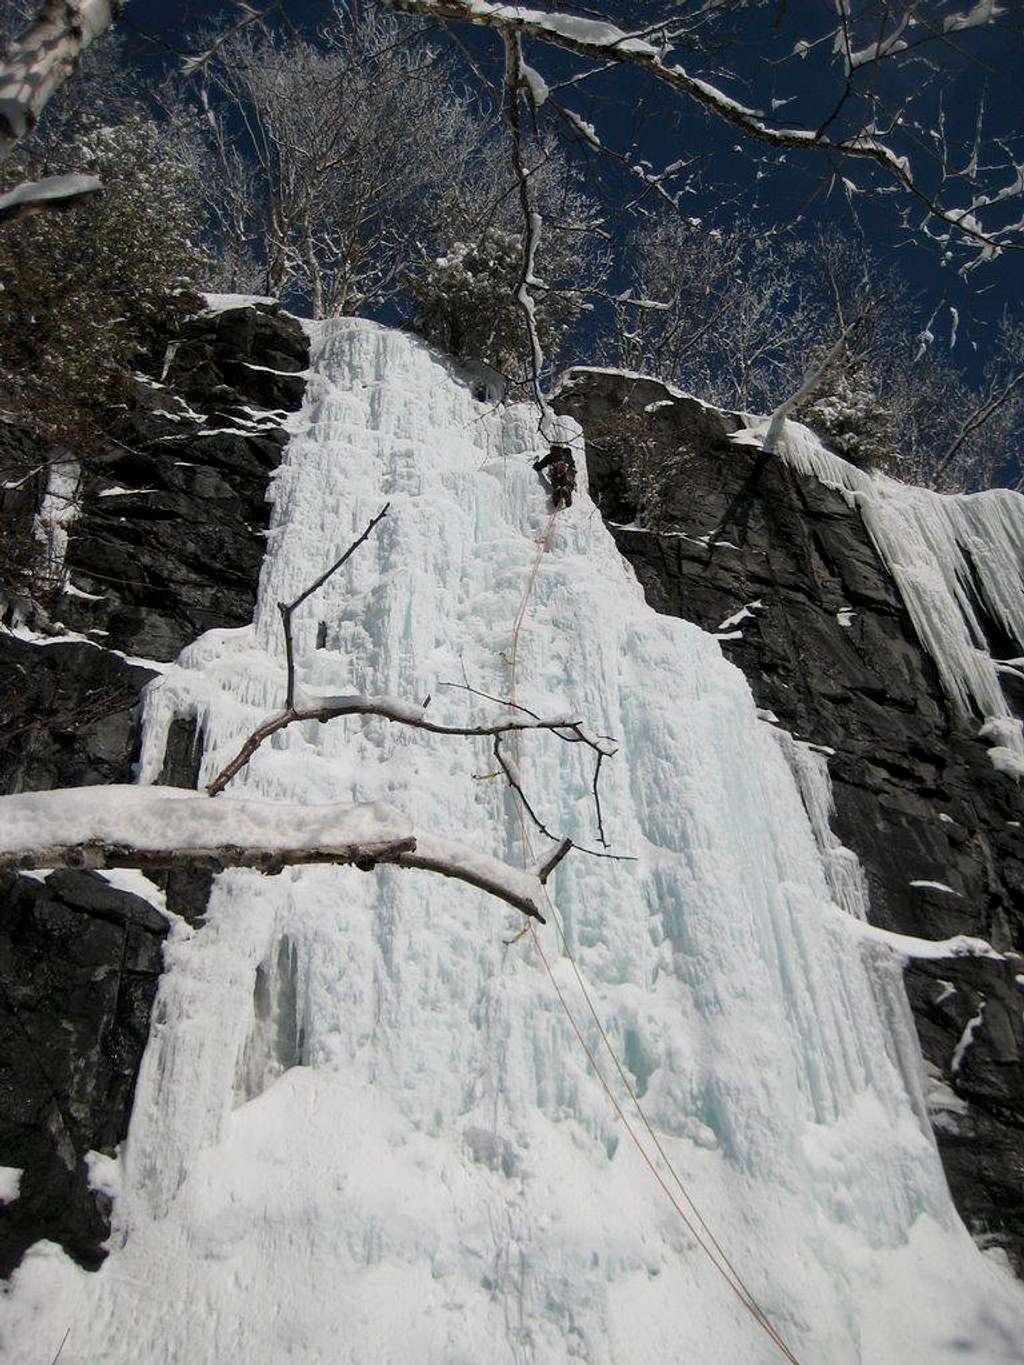 Adirondacks Ice, Chiller Pillar WI4